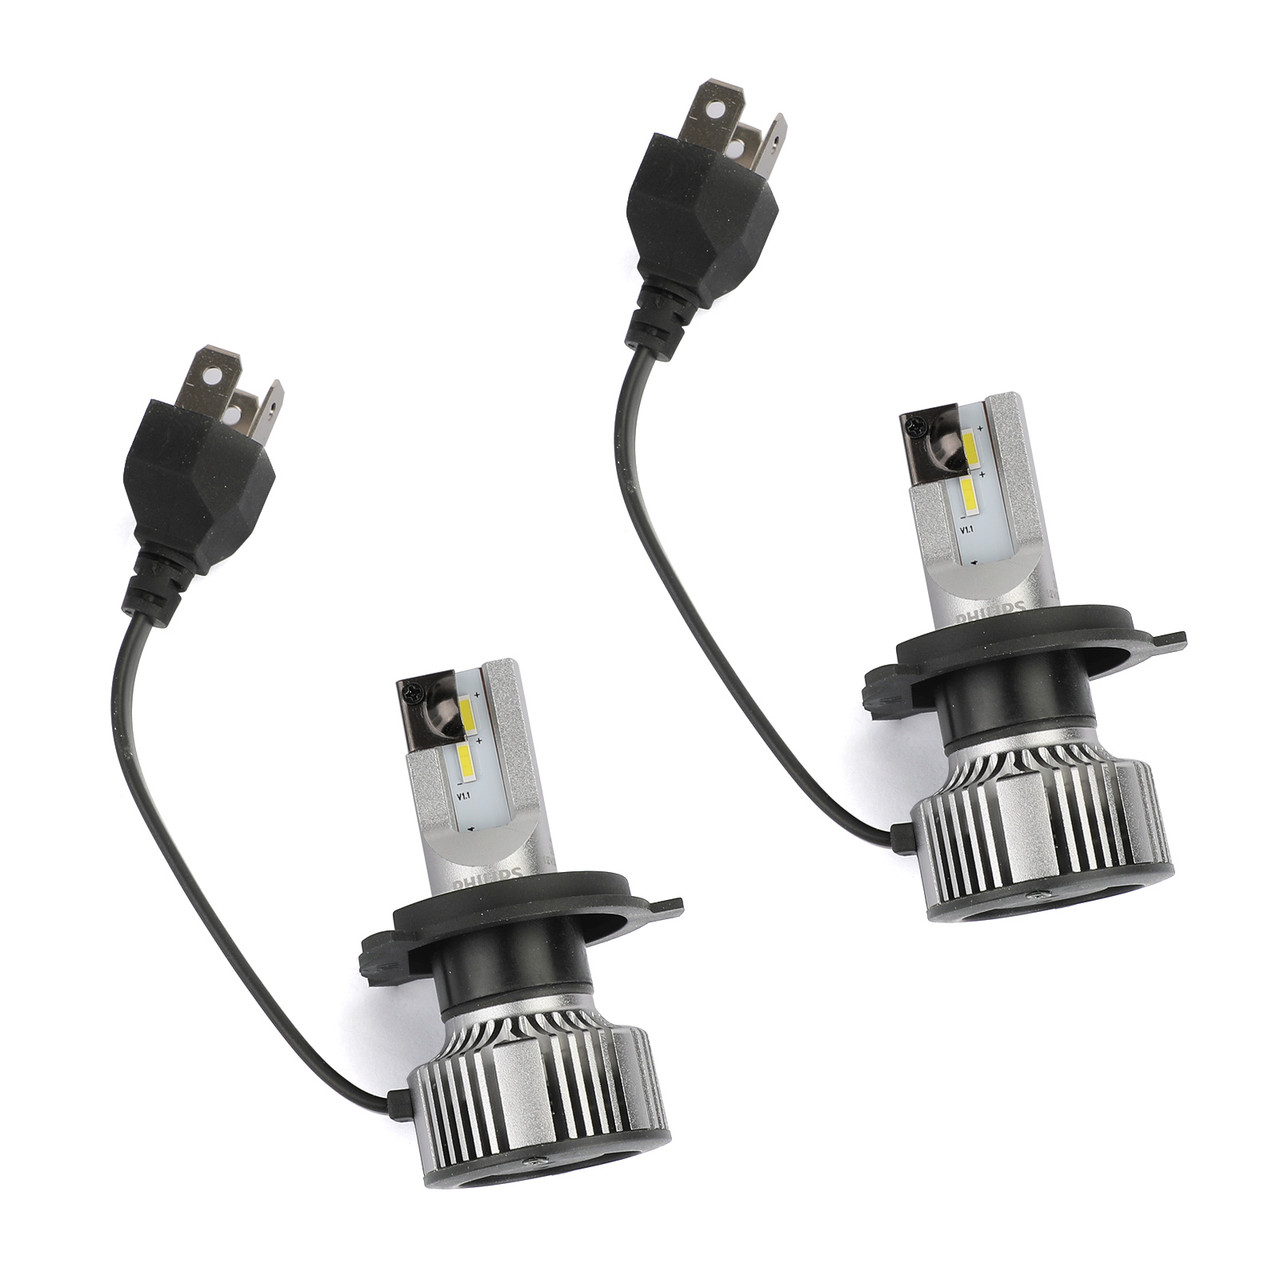 H4 Ultinon Essential G2 LED Bulb 12V/24V 21W (Set of 2): PHILIPS